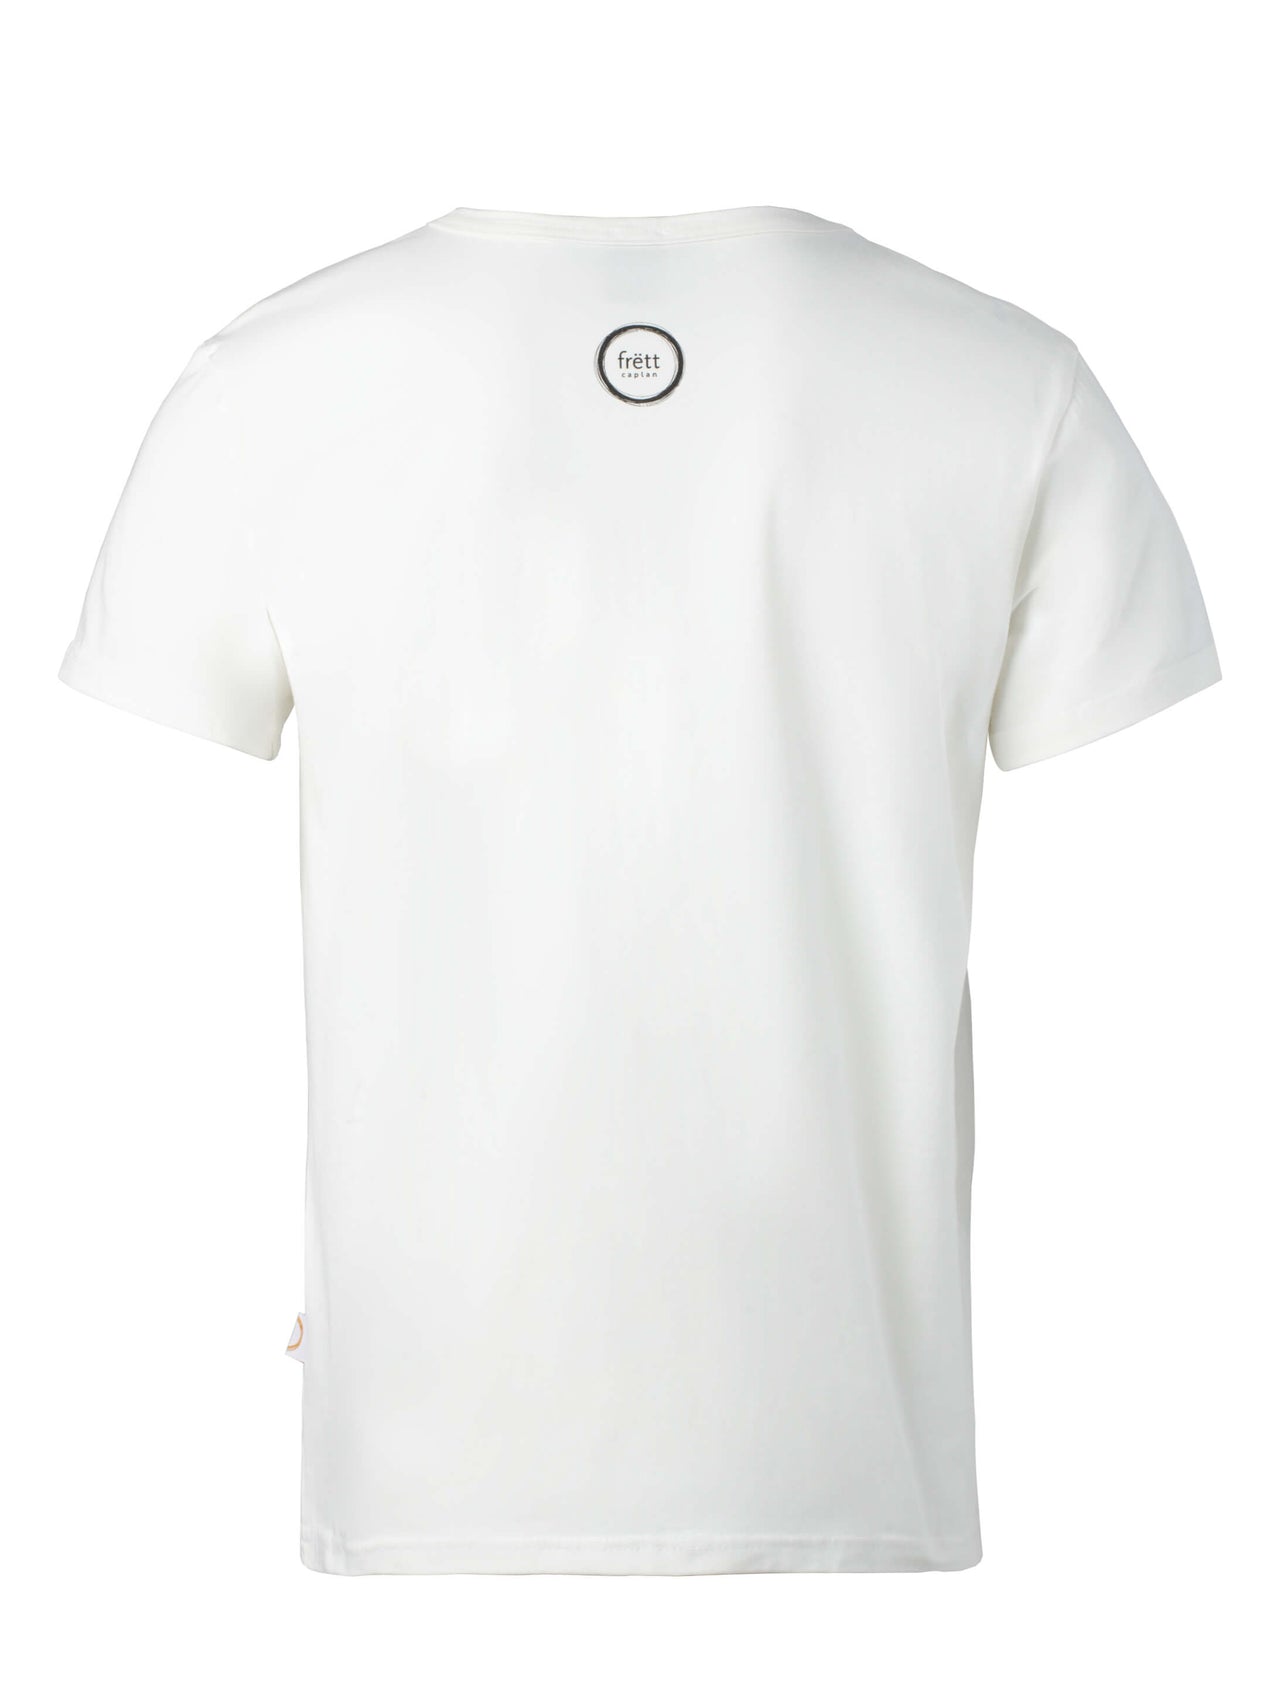 T-shirt-UNISEXE chapitaine-Coton bio-blanc-ghost dos-FC10